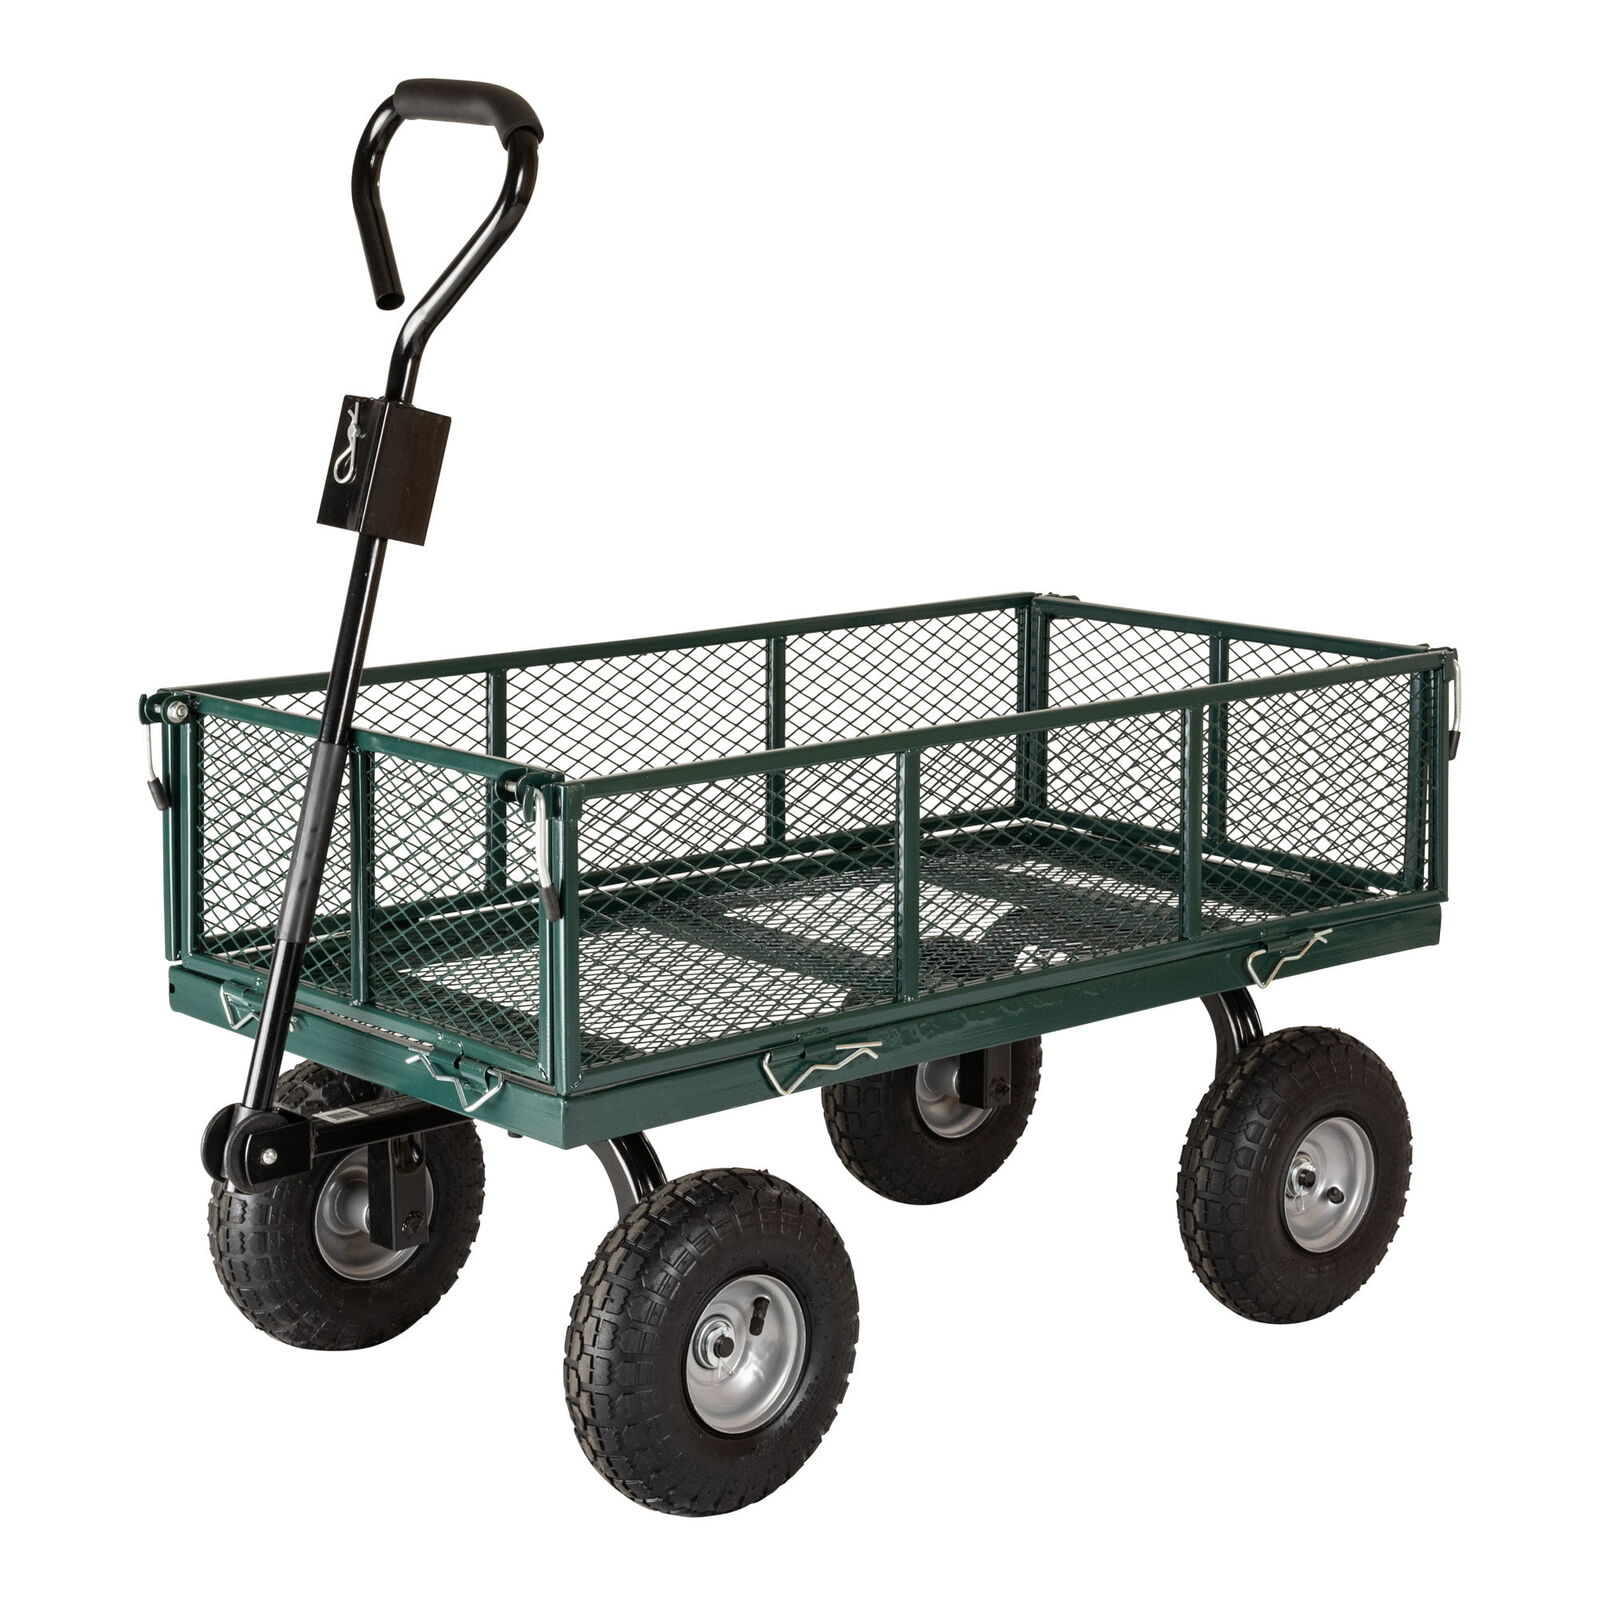 Garden Carts Yard Dump Wagon Cart Lawn Utility Cart Outdoor Steel Heavy Duty Does not apply